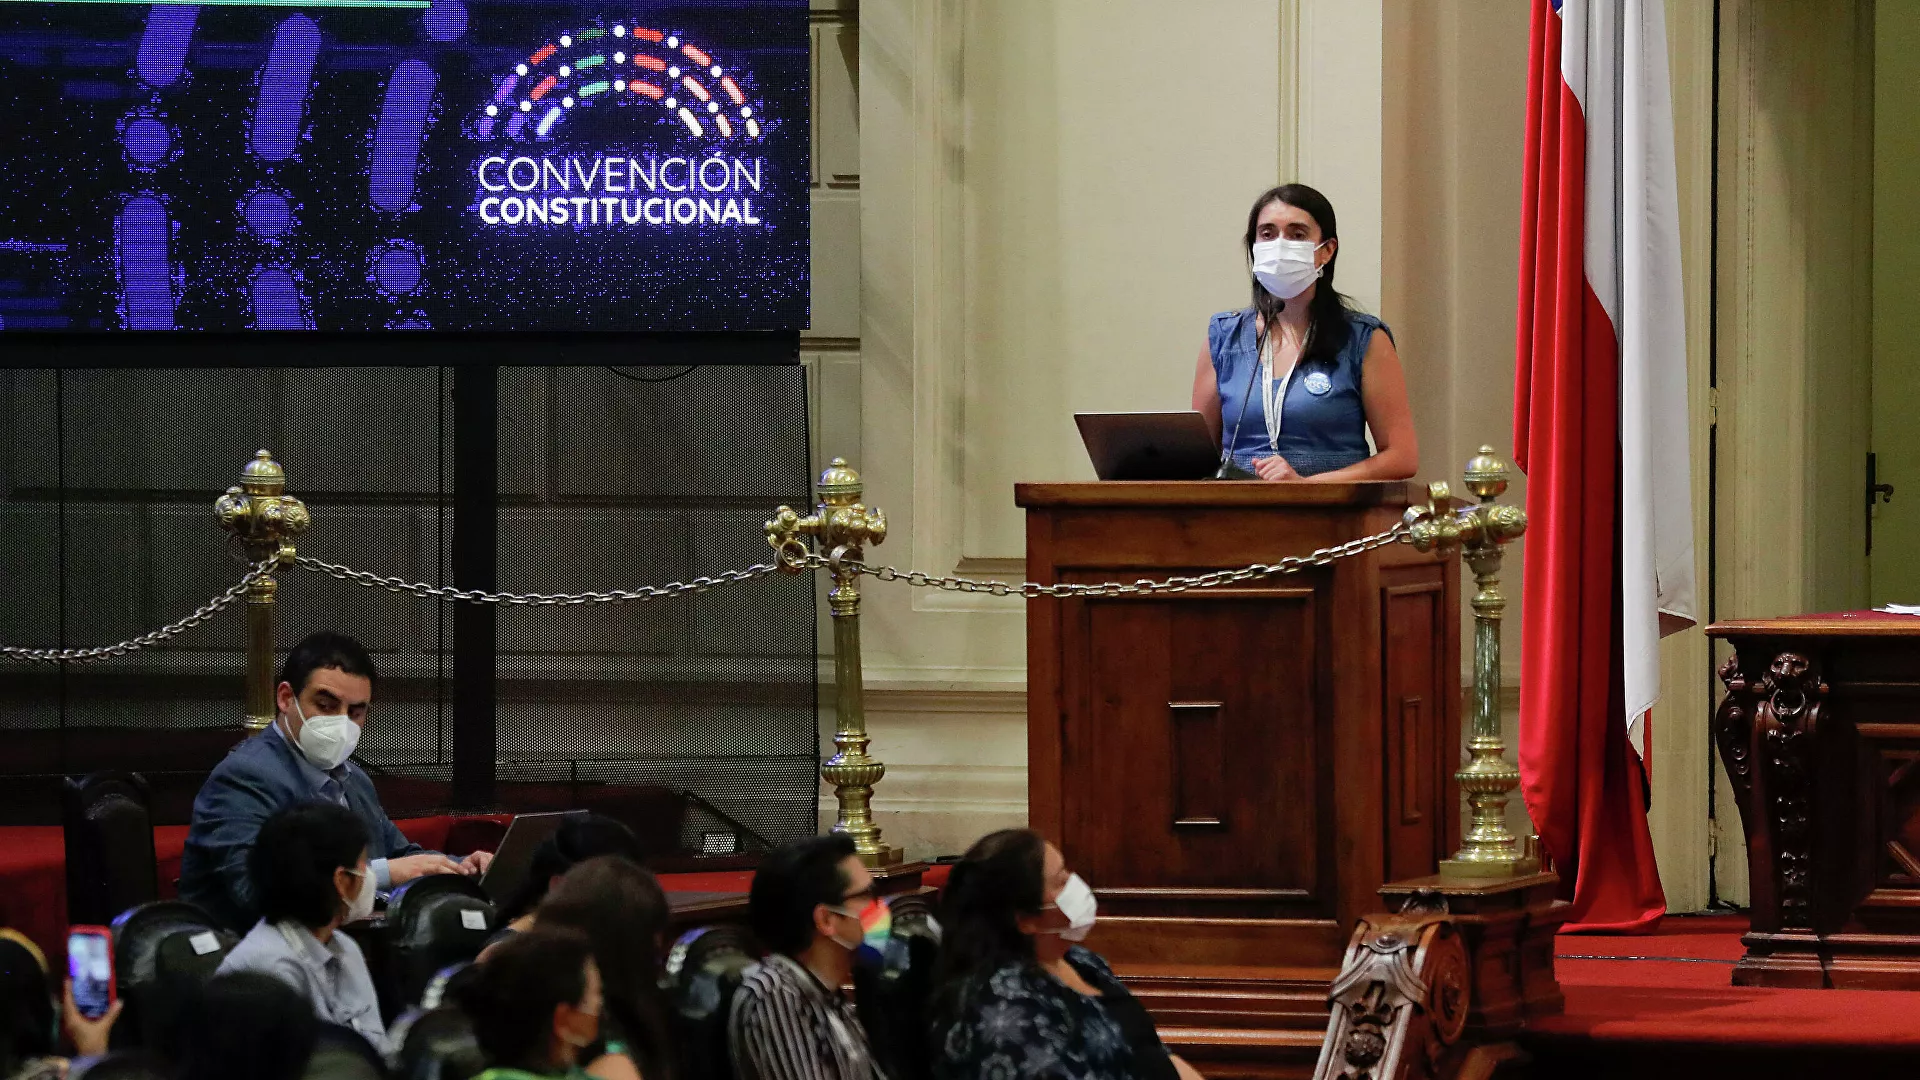  Quinteros, la odontóloga que llegó a liderar la Convención Constitucional de Chile